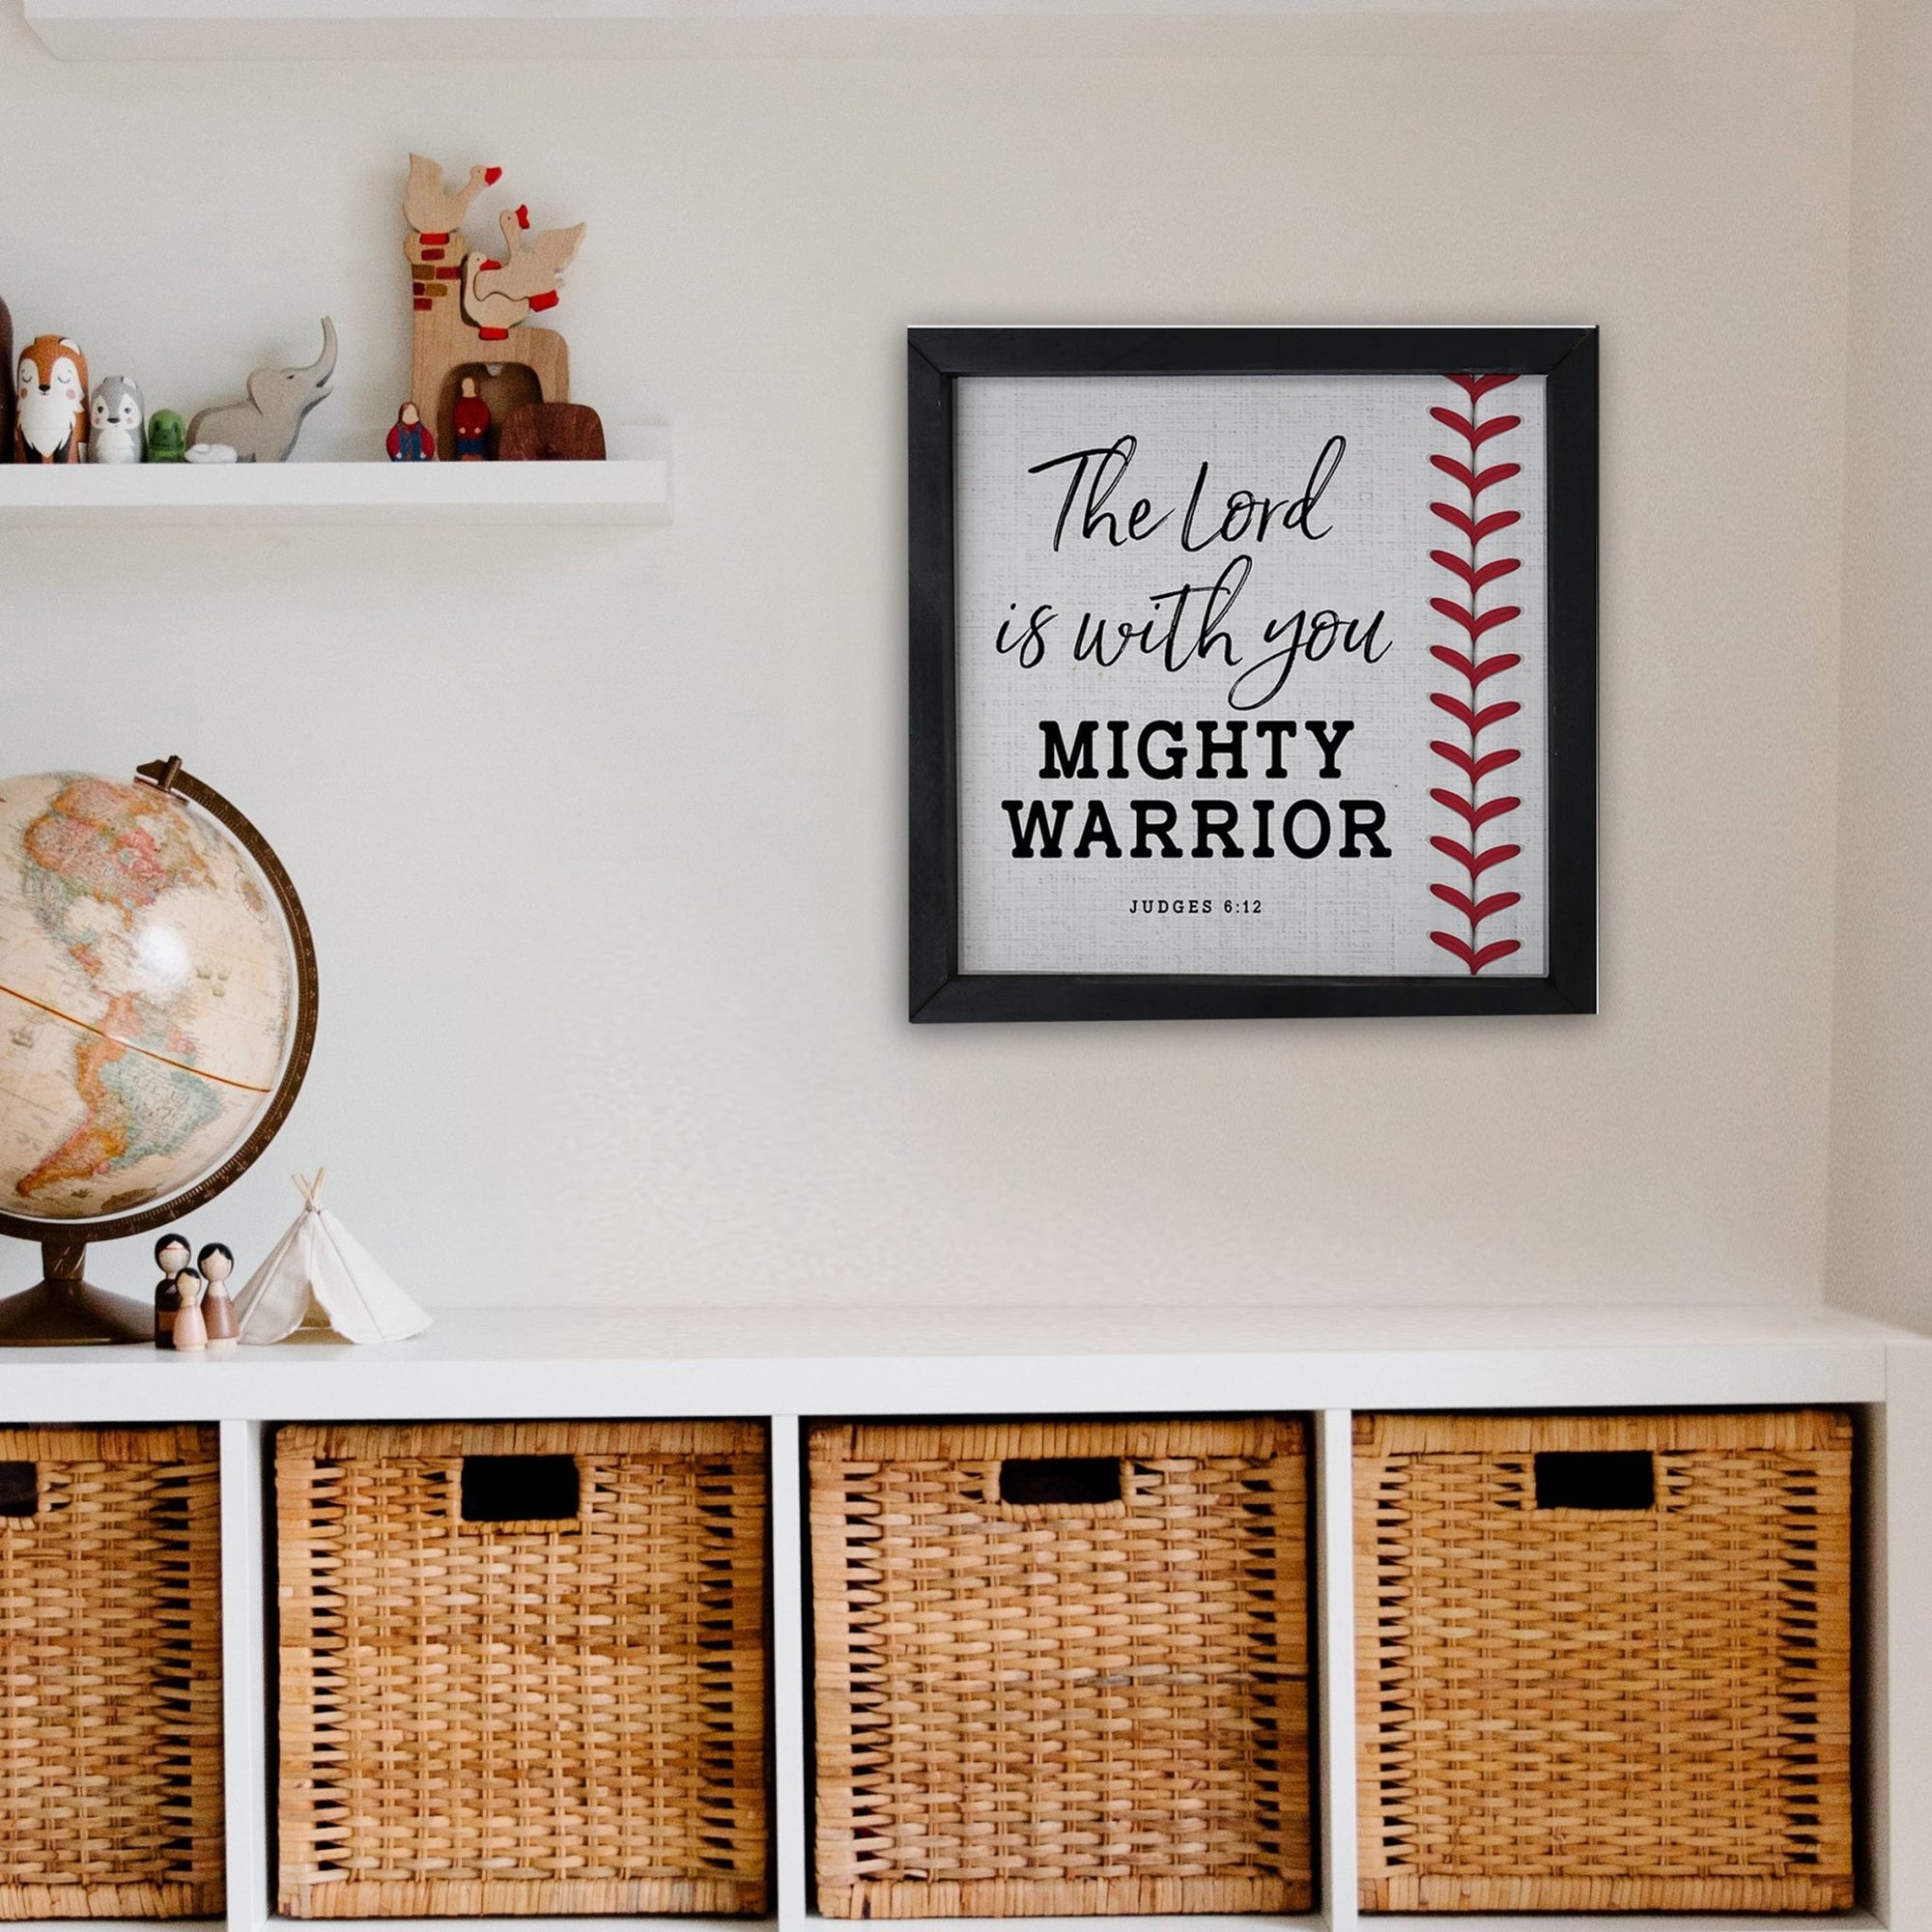 Elegant Baseball Framed Shadow Box Shelf Décor With Inspiring Bible Verses - Mighty Warrior - LifeSong Milestones